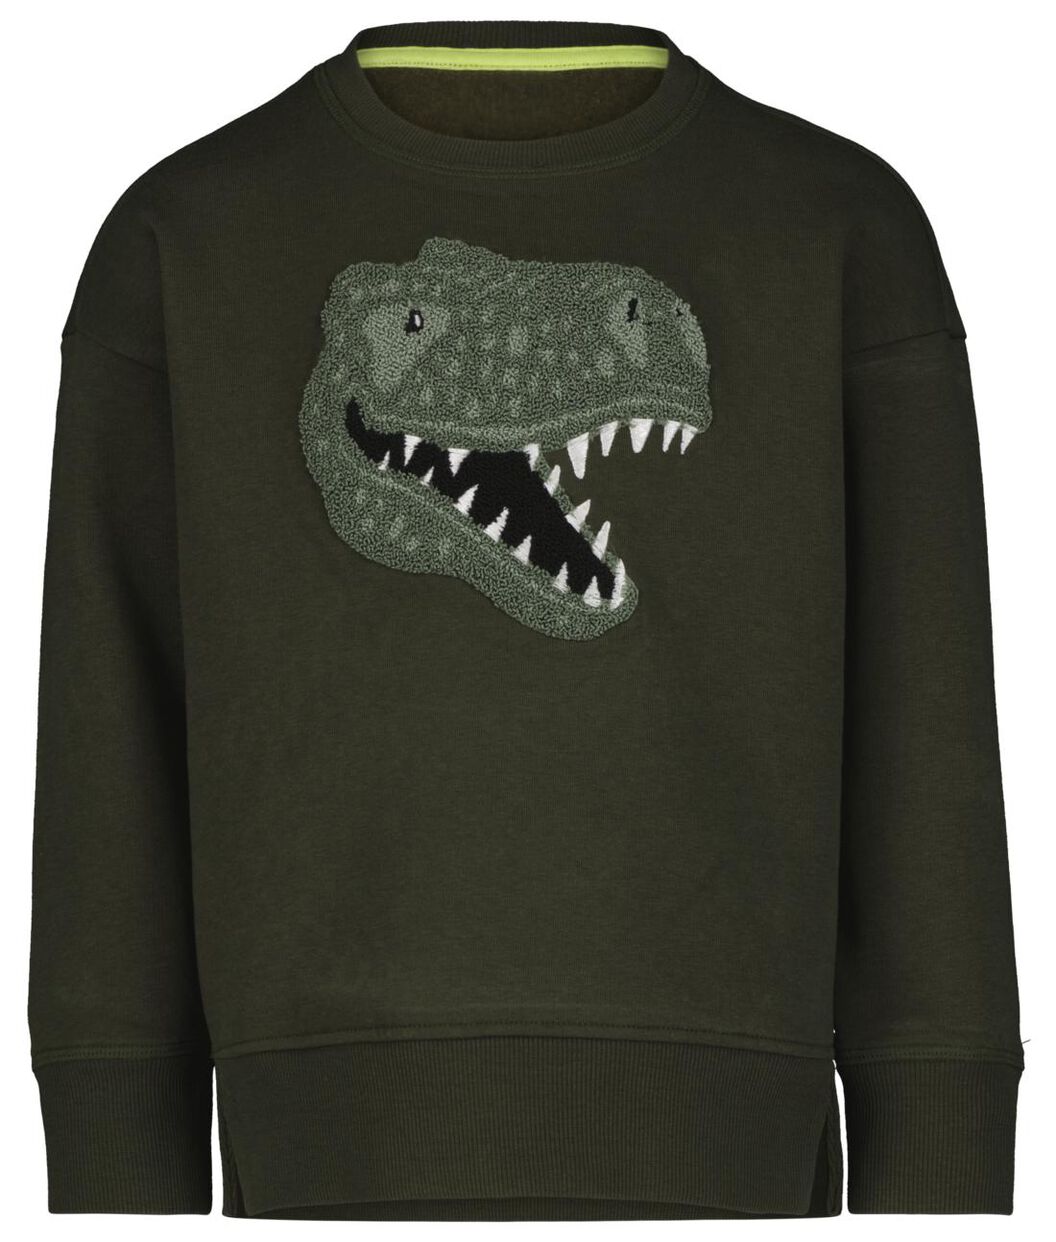 Snel iets hoofd children's sweater dinosaur army green - HEMA